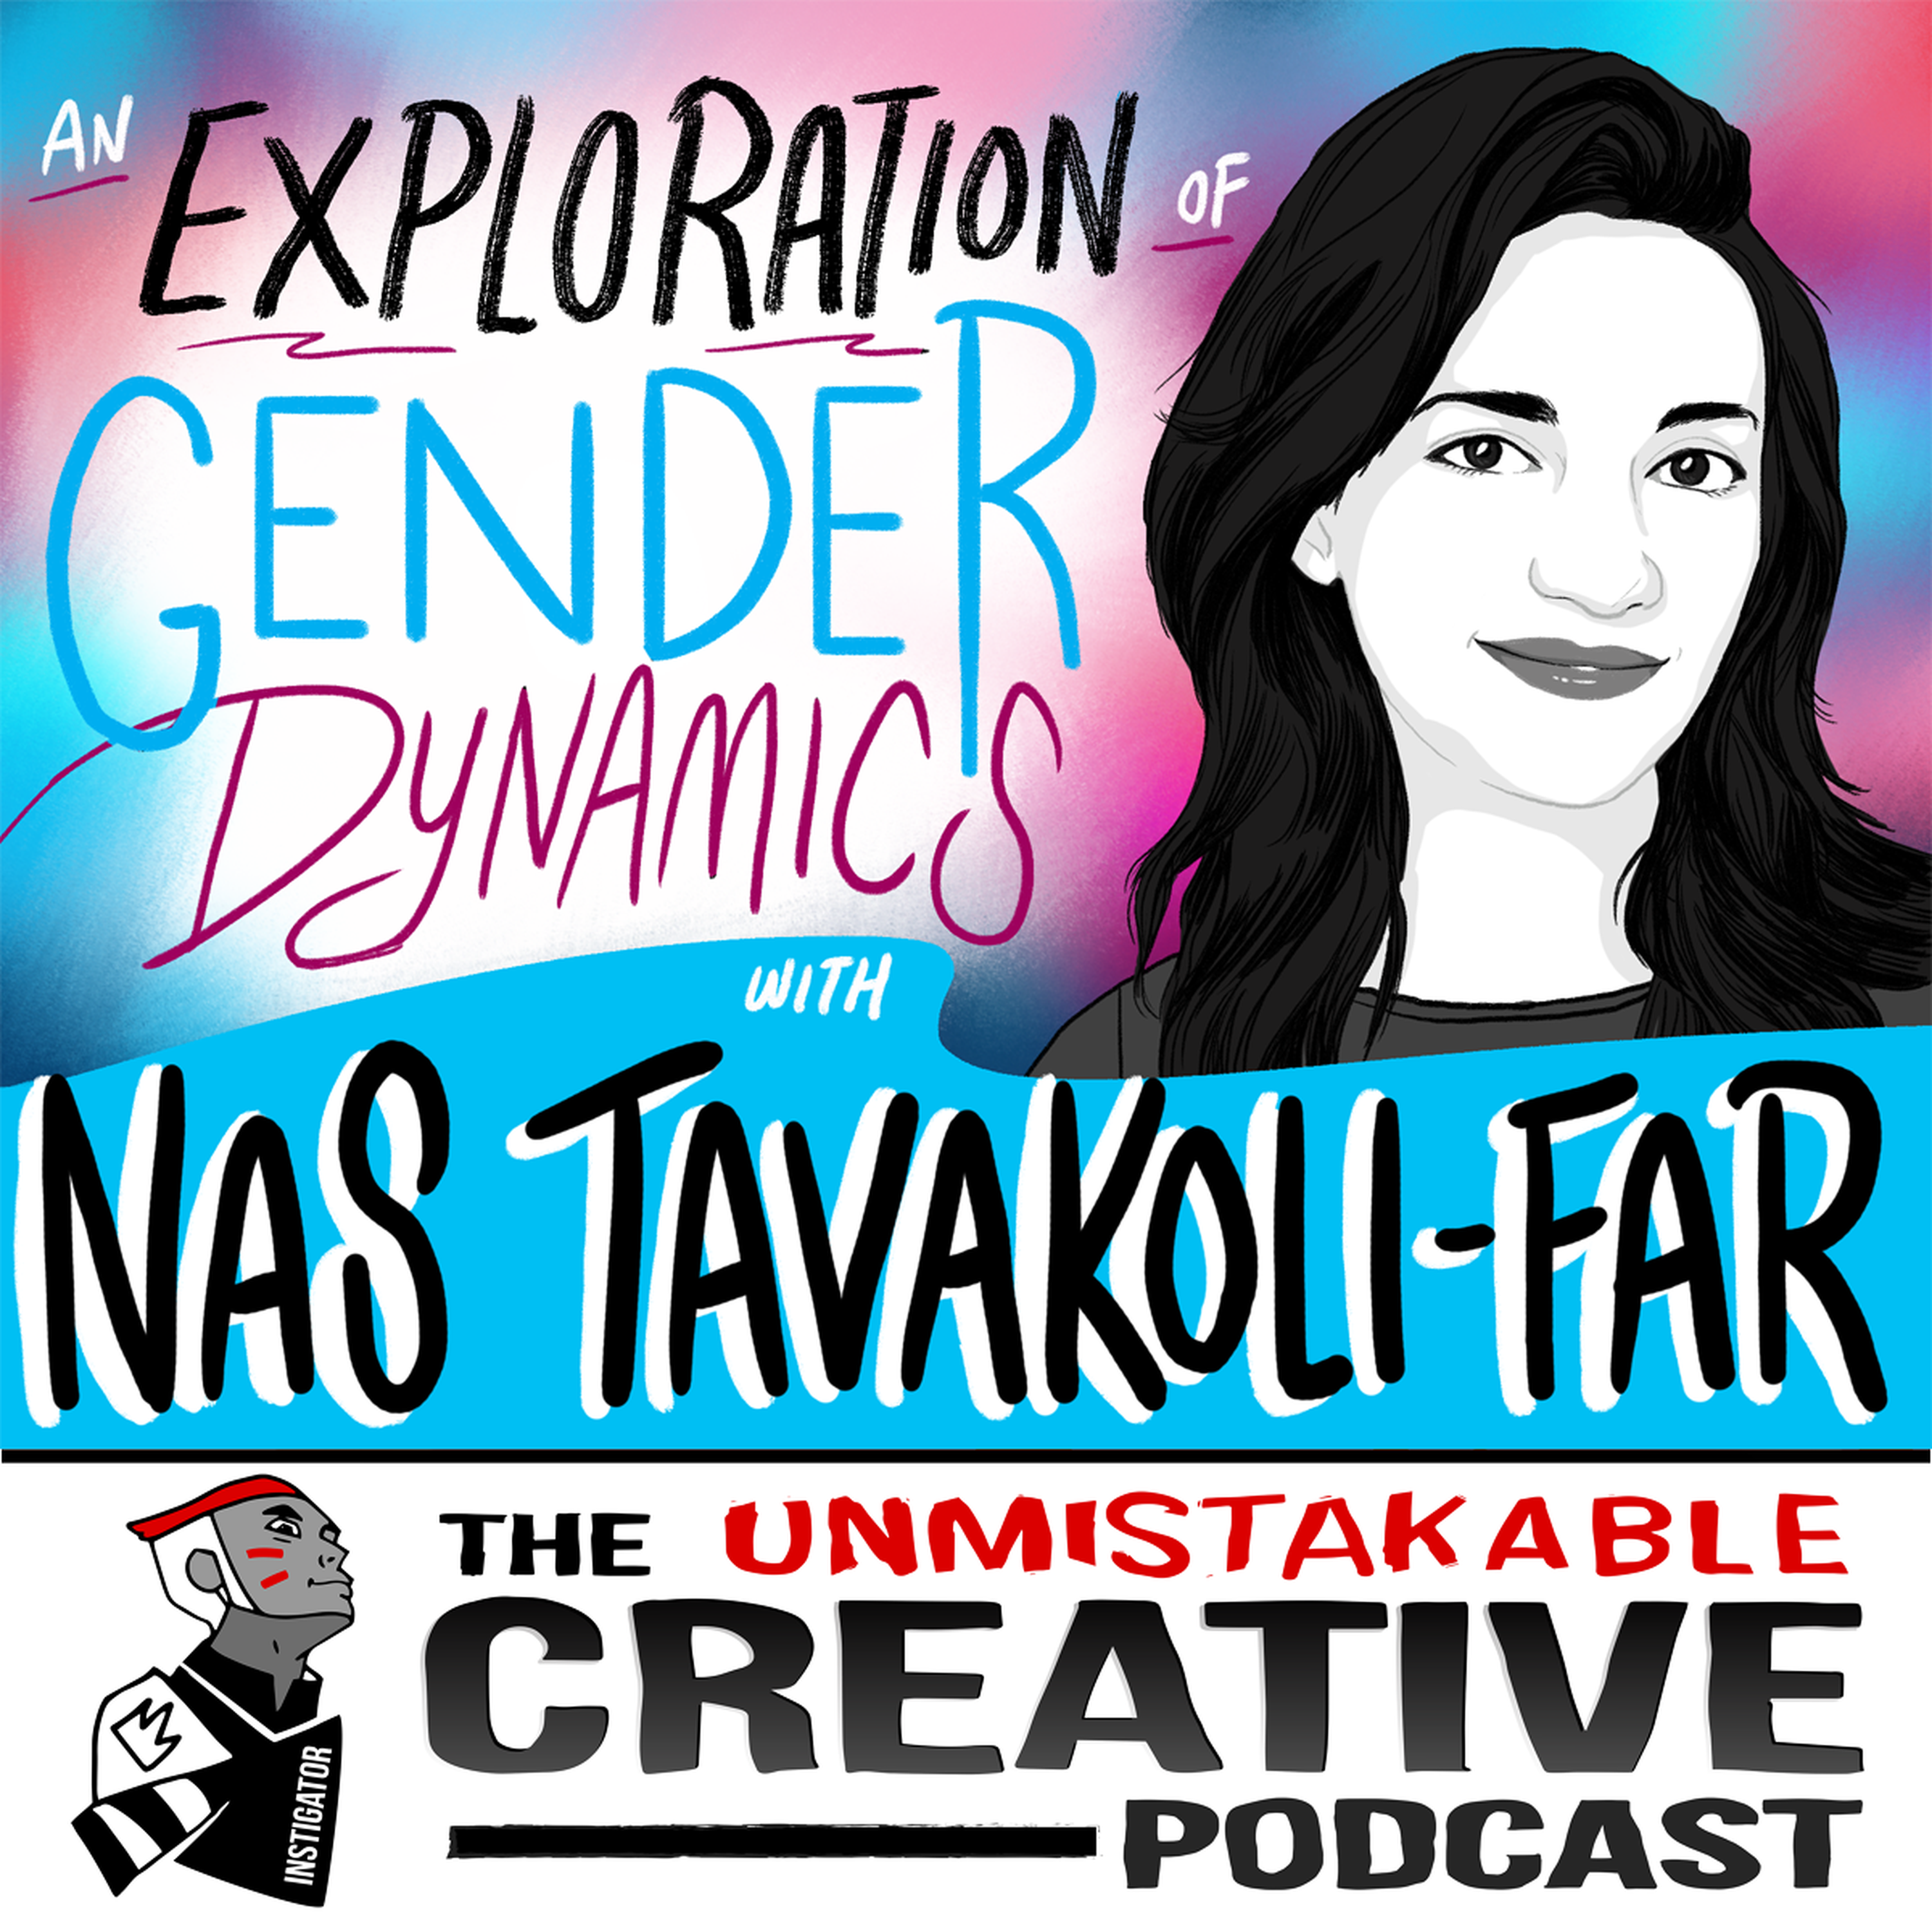 Nas Tavakoli-Far: An Exploration of Gender Dynamics